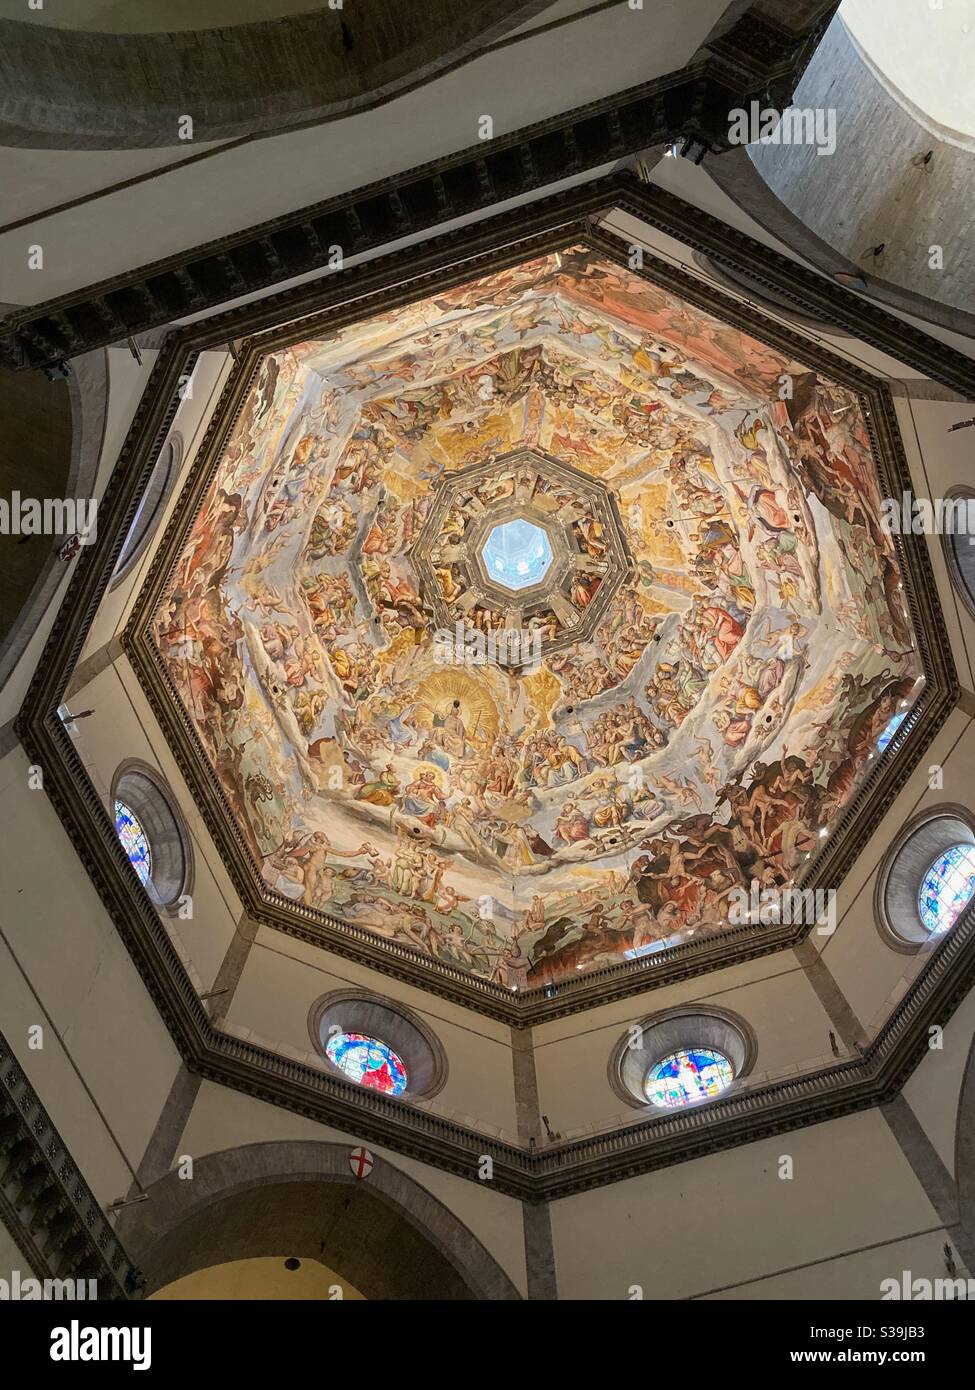 Interior of Duomo Dome, Florence, Italy Stock Photo